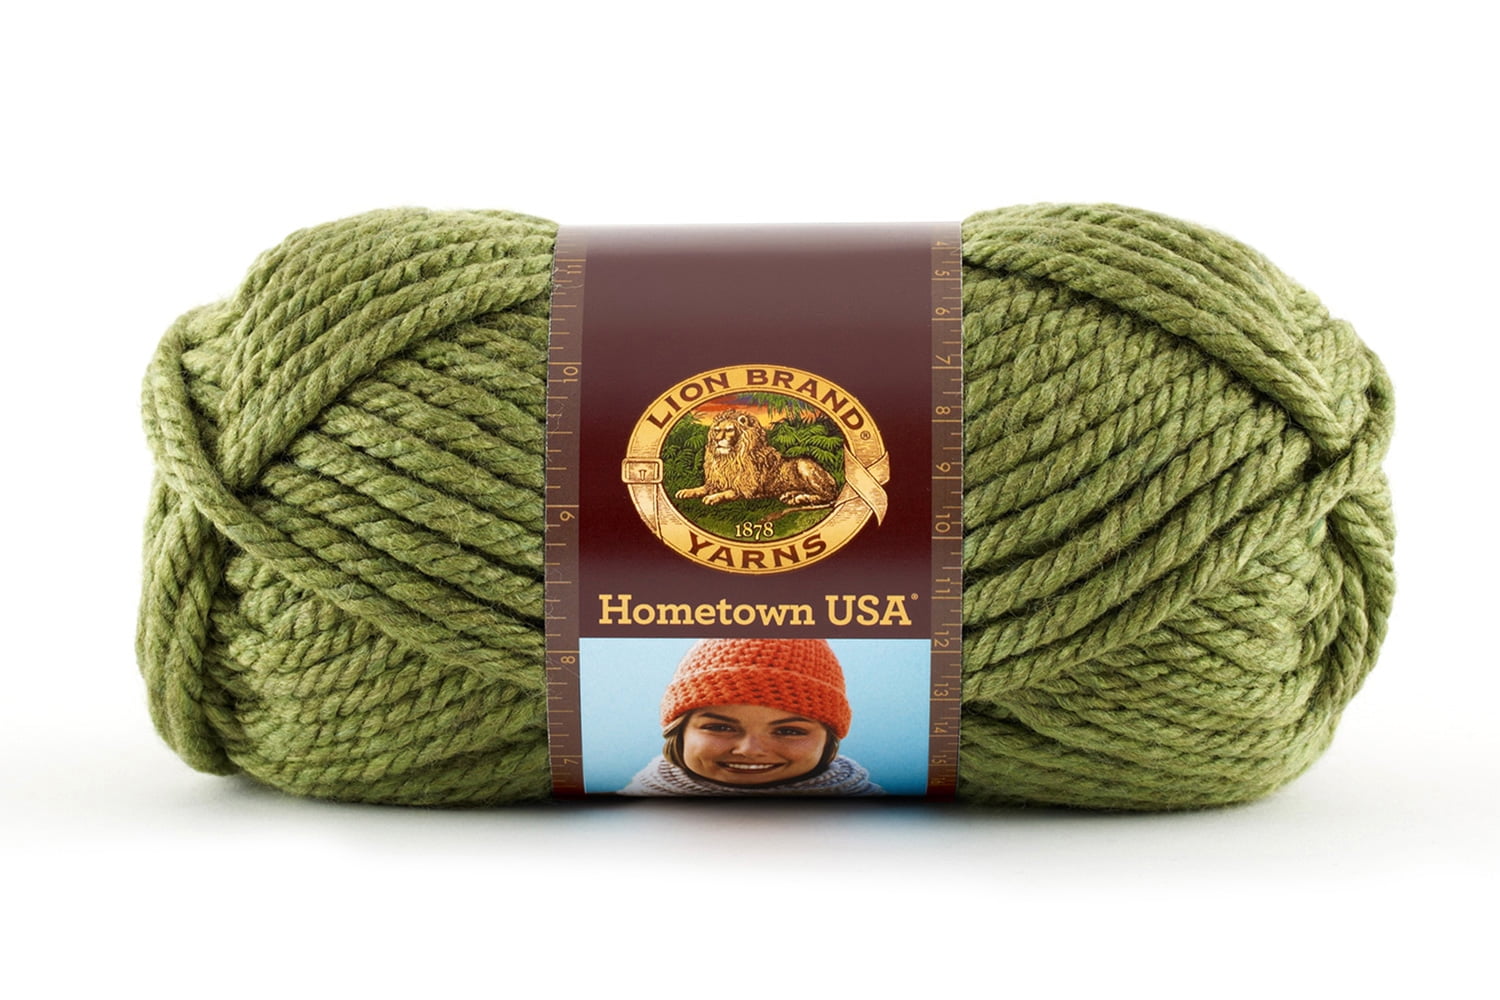 NJ-based Lion Brand, oldest US yarn company, turns 145 years old